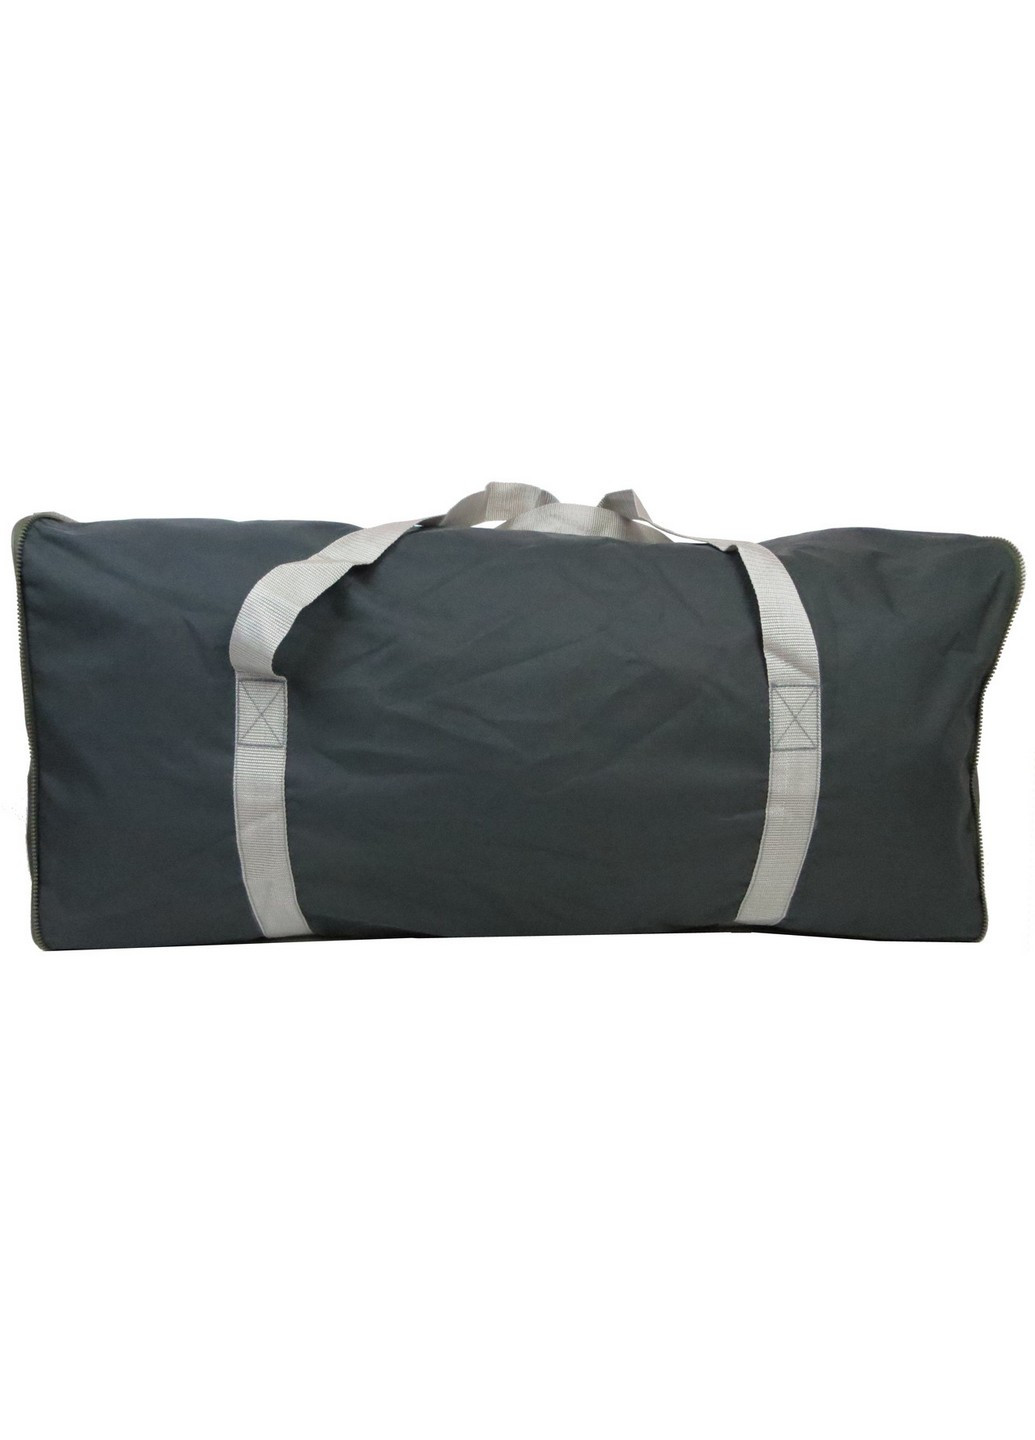 Велика складана дорожня сумка, баул із кордури 105 л 85х38х34 см Ukr Military (258032585)